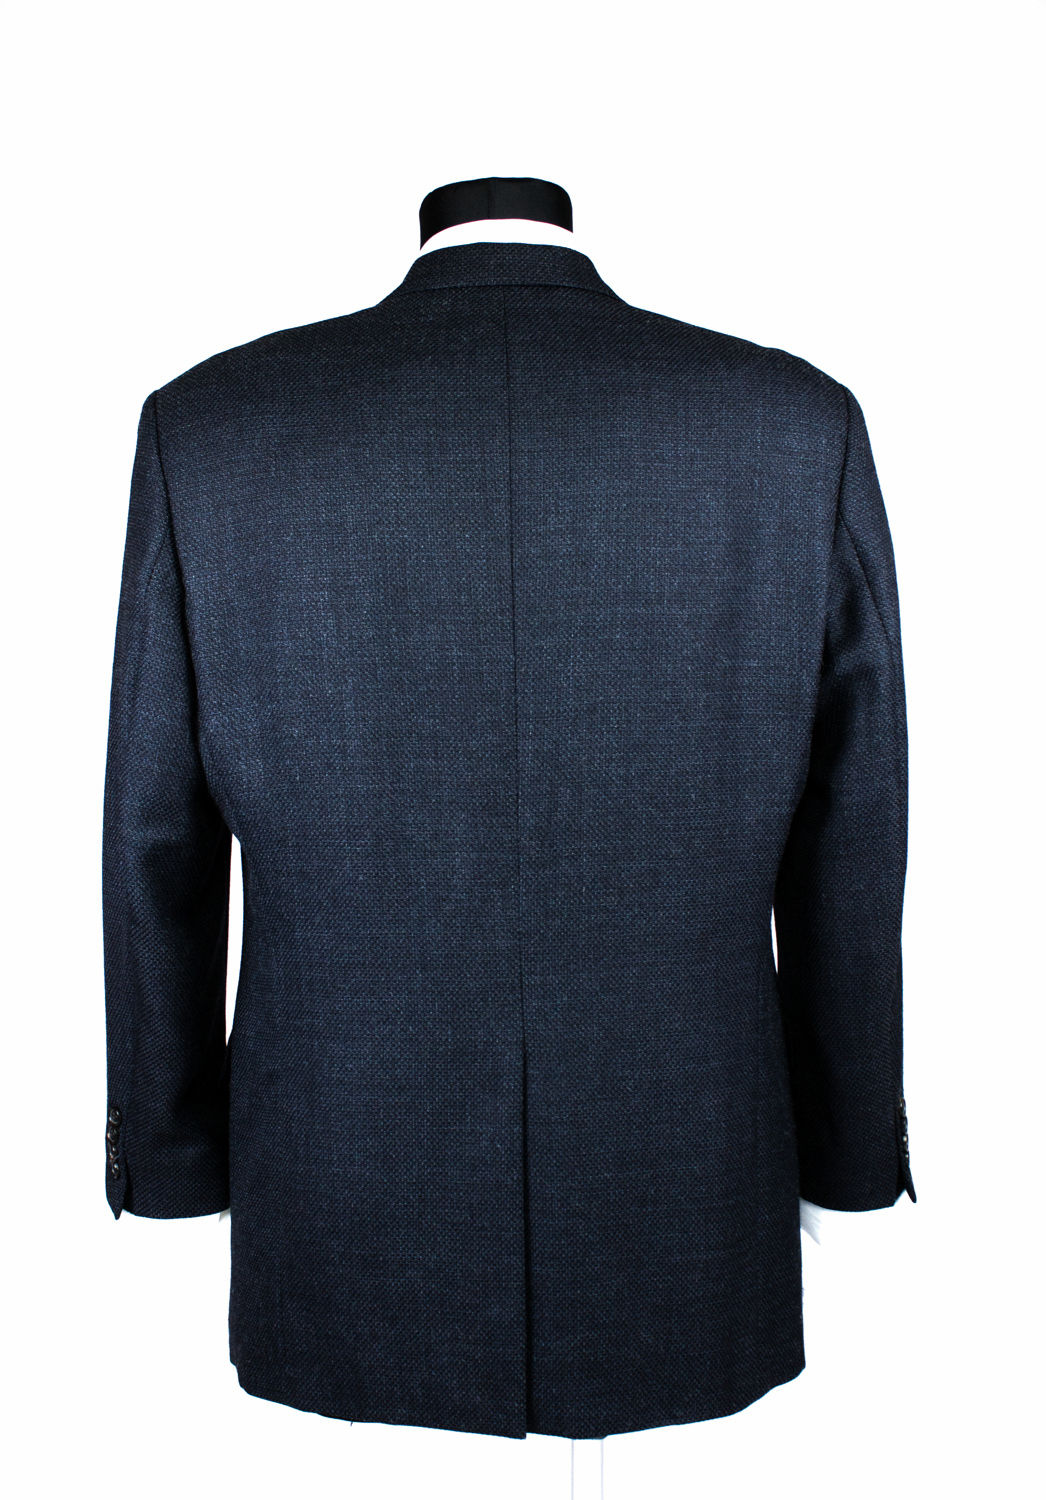 HUGO BOSS Wool & Silk Blazer, US 42 L/EU 102 - secondfirst